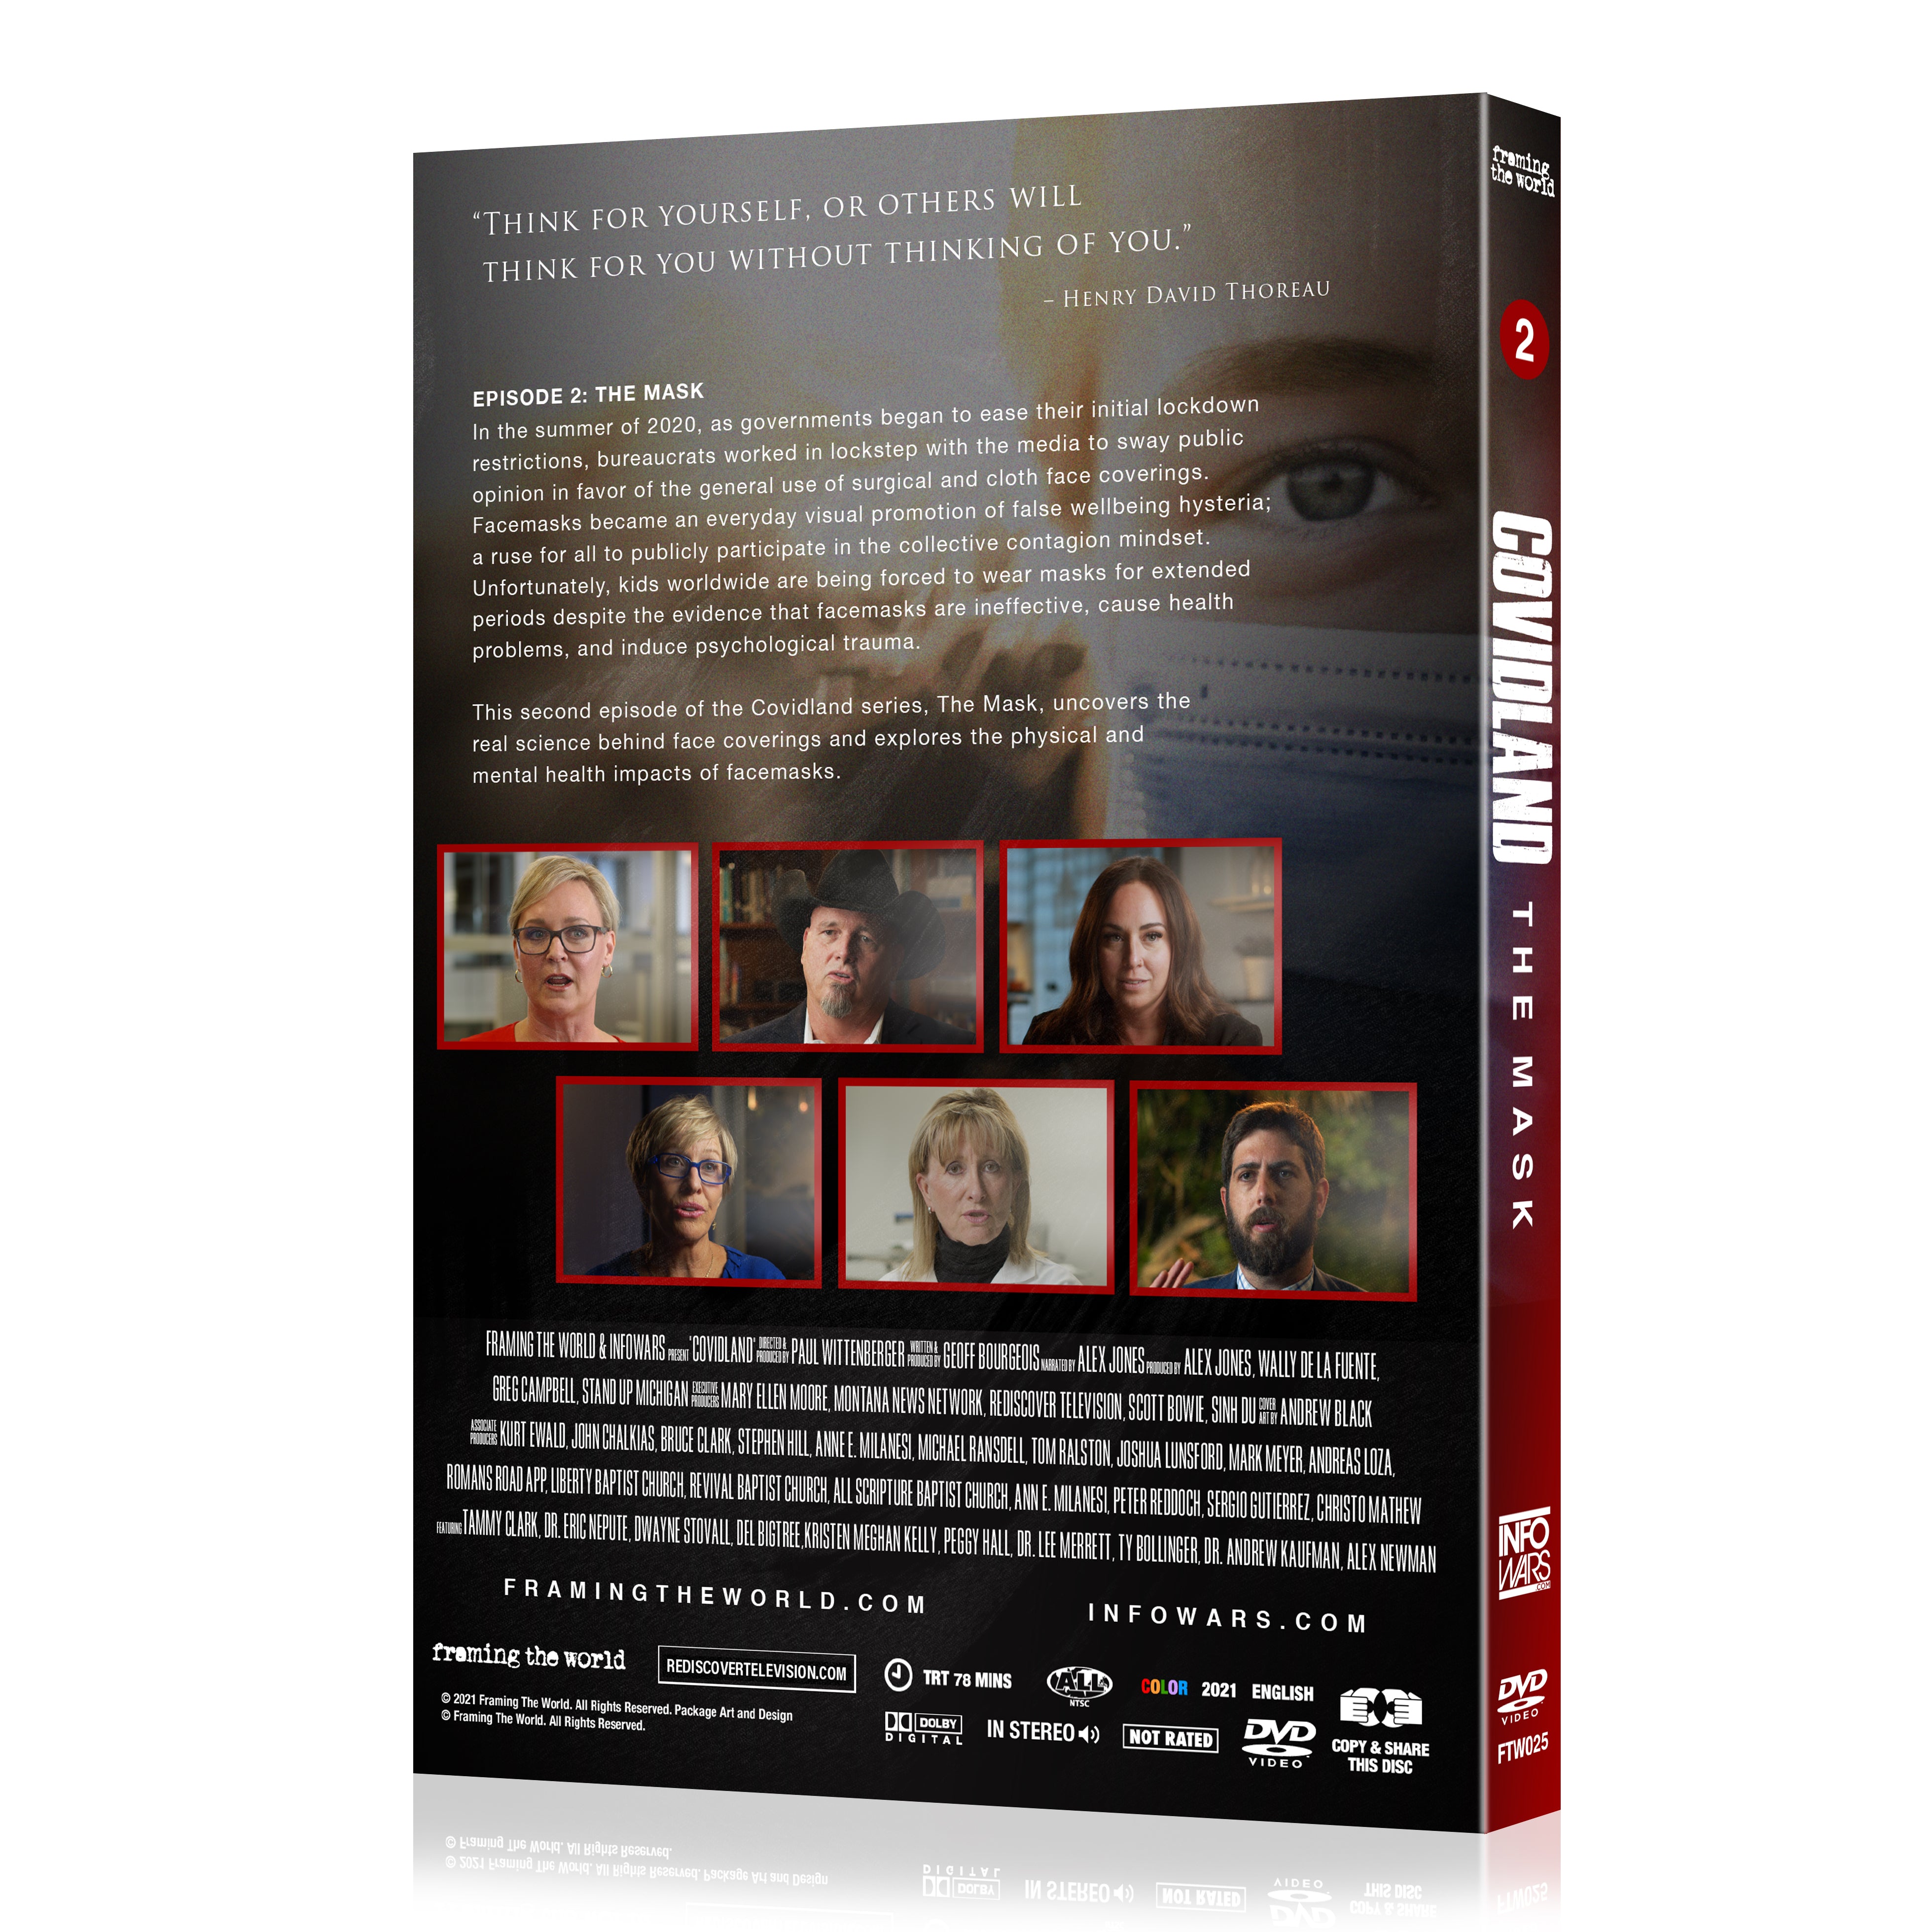 Covidland 2: The Mask (DVD)